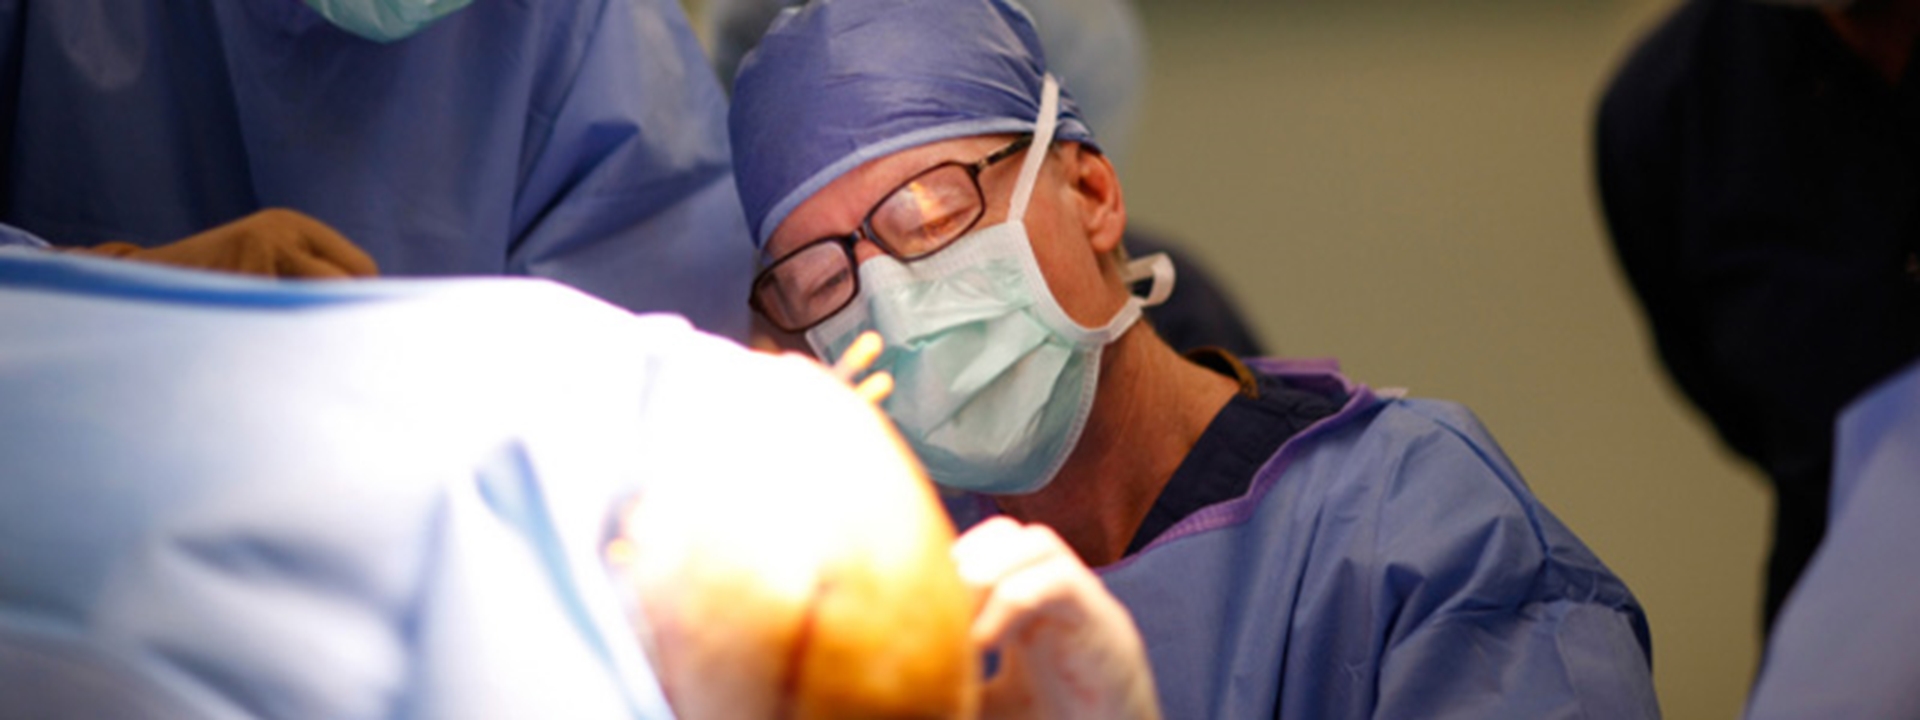 neurosurgeons performing deep brain surgery on patient